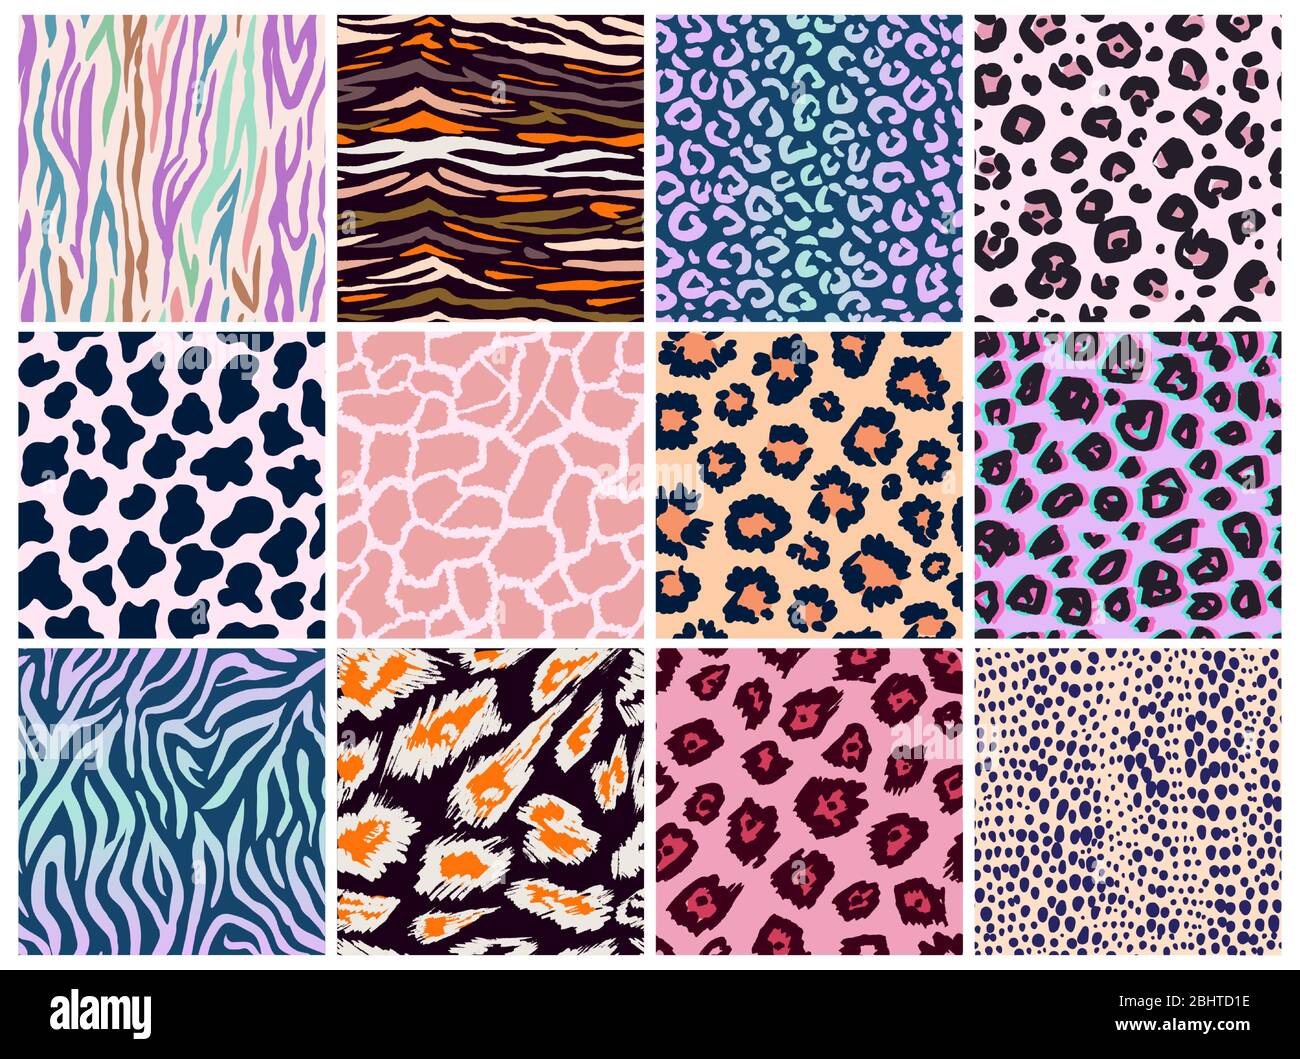 Leopard Camouflage Print, Seamless Pattern. Skin of Cheetah